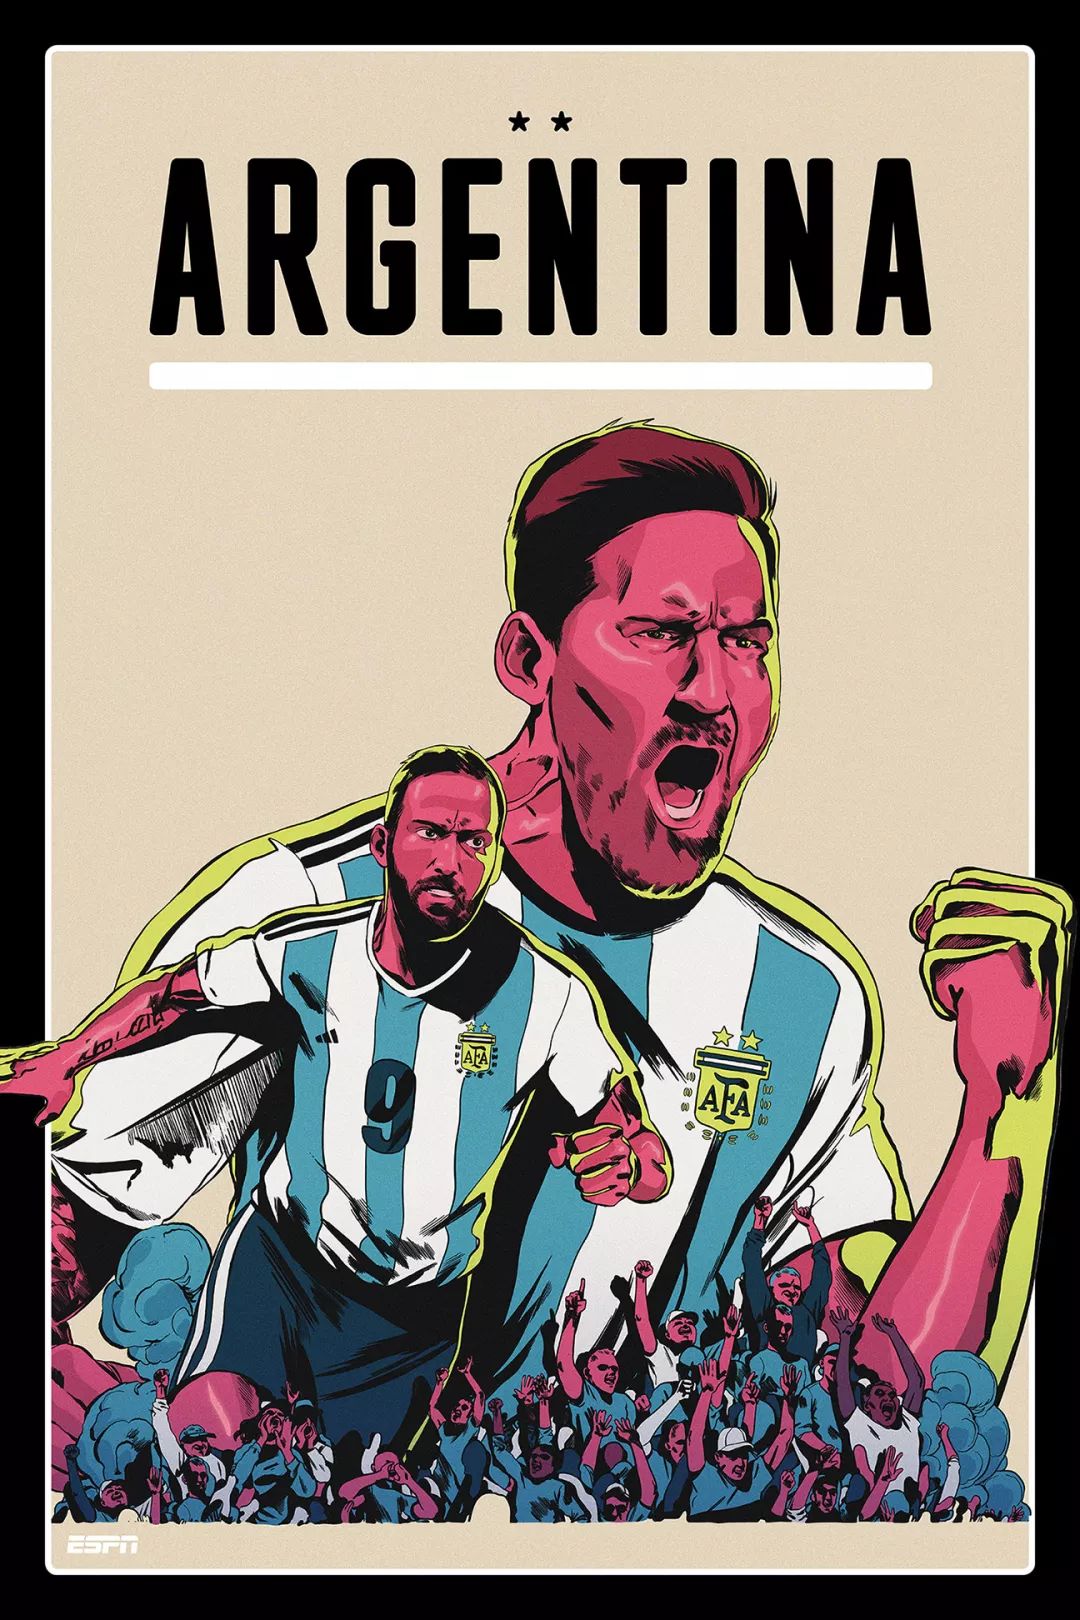 ESPN世界杯插画海报设计